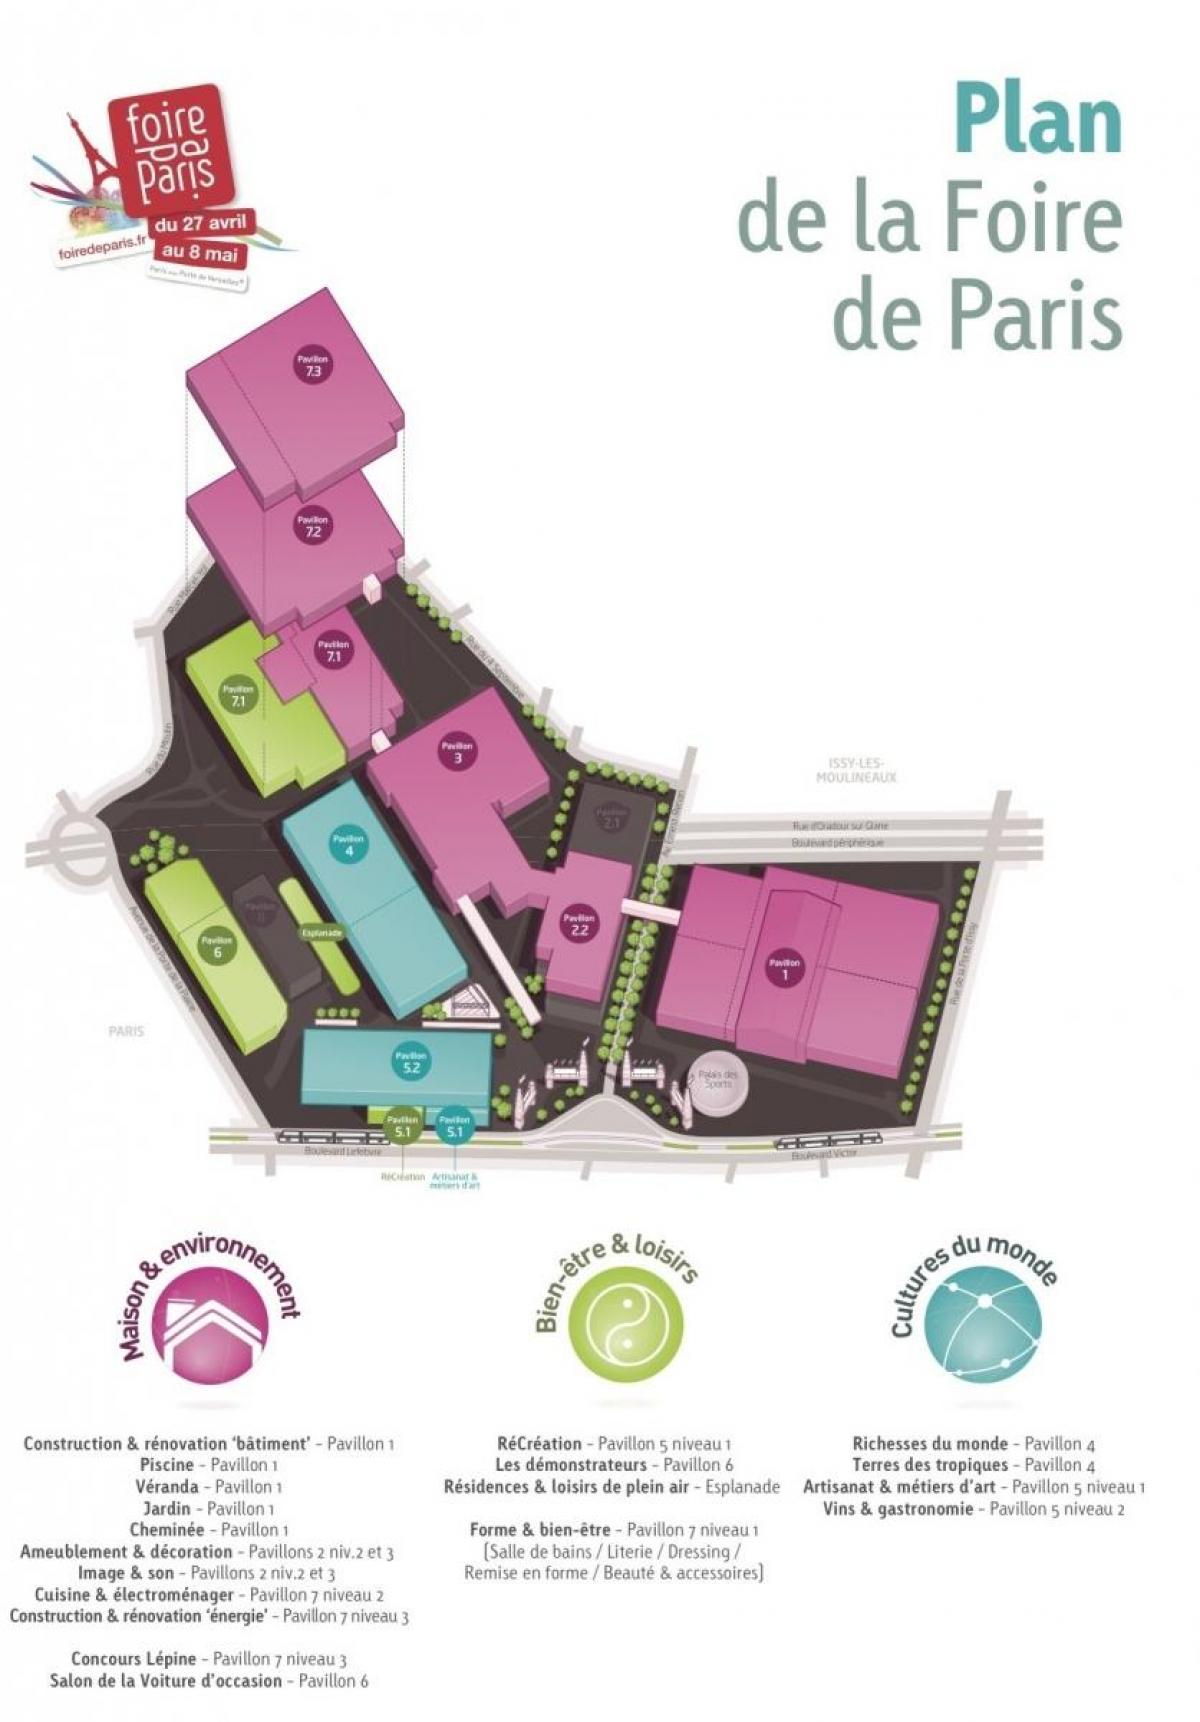 Foire de Paris haritası